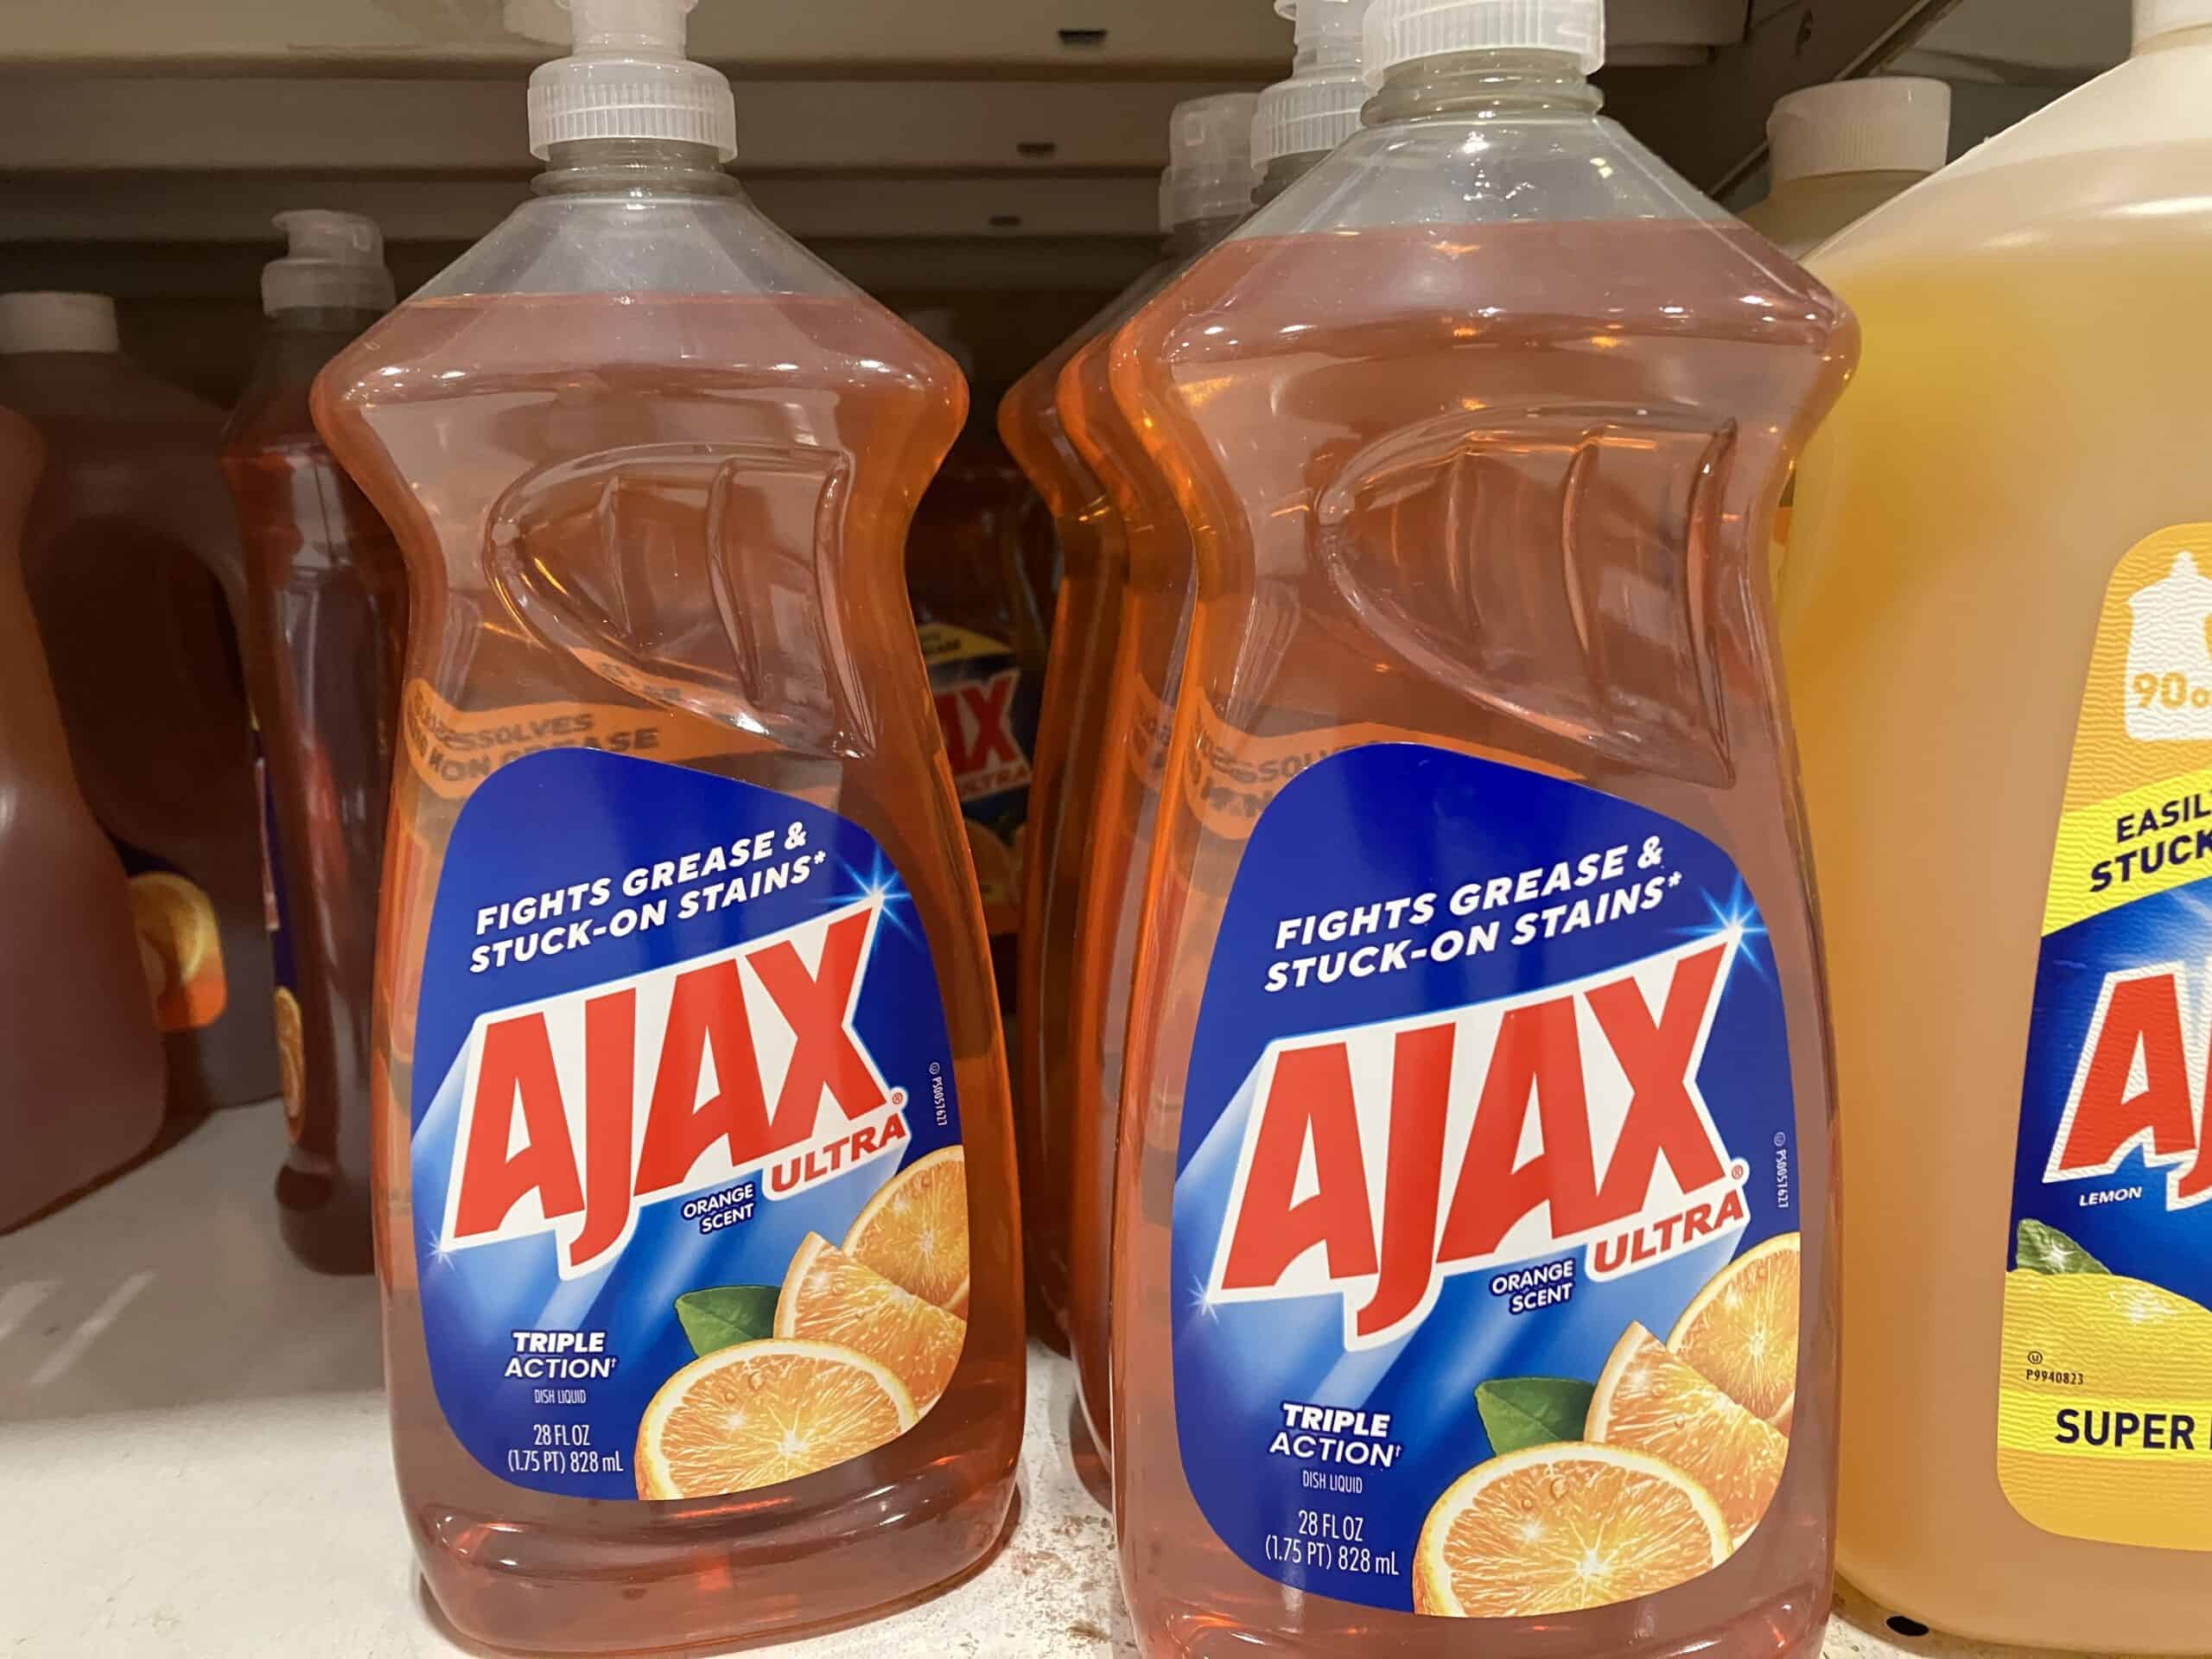 Ajax dish soap